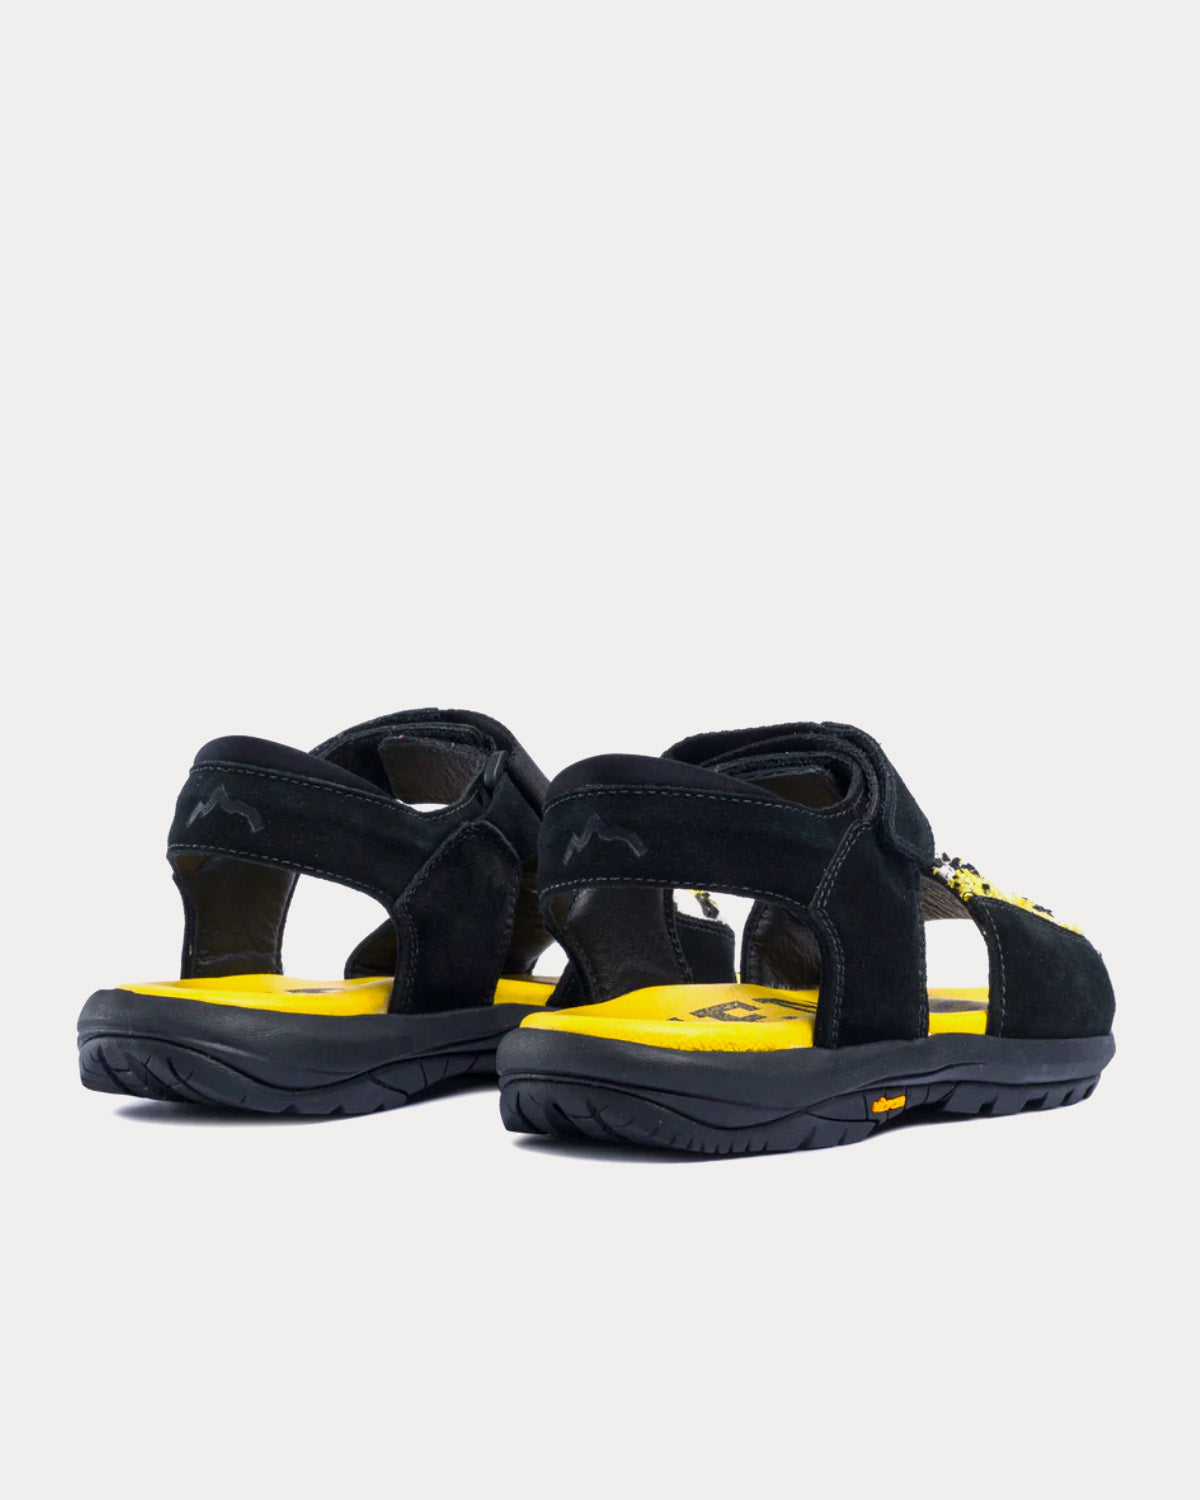 Diemme - Dune Black / Light Yellow Sandals